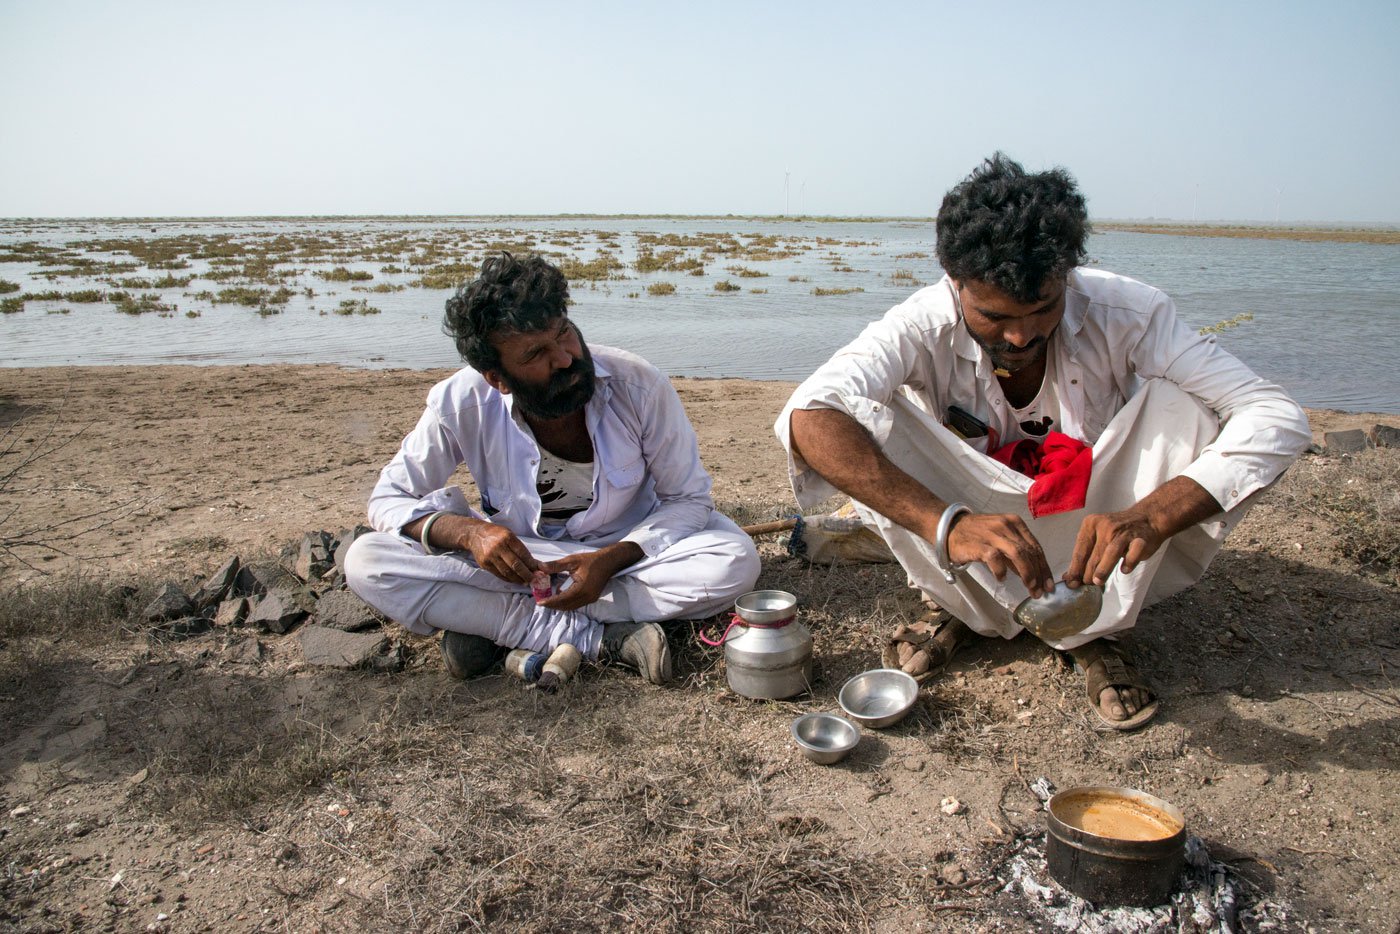 Jethabhai Rabari (left) and Dudabhai Rabari making tea after grazing their camels in Khambaliya